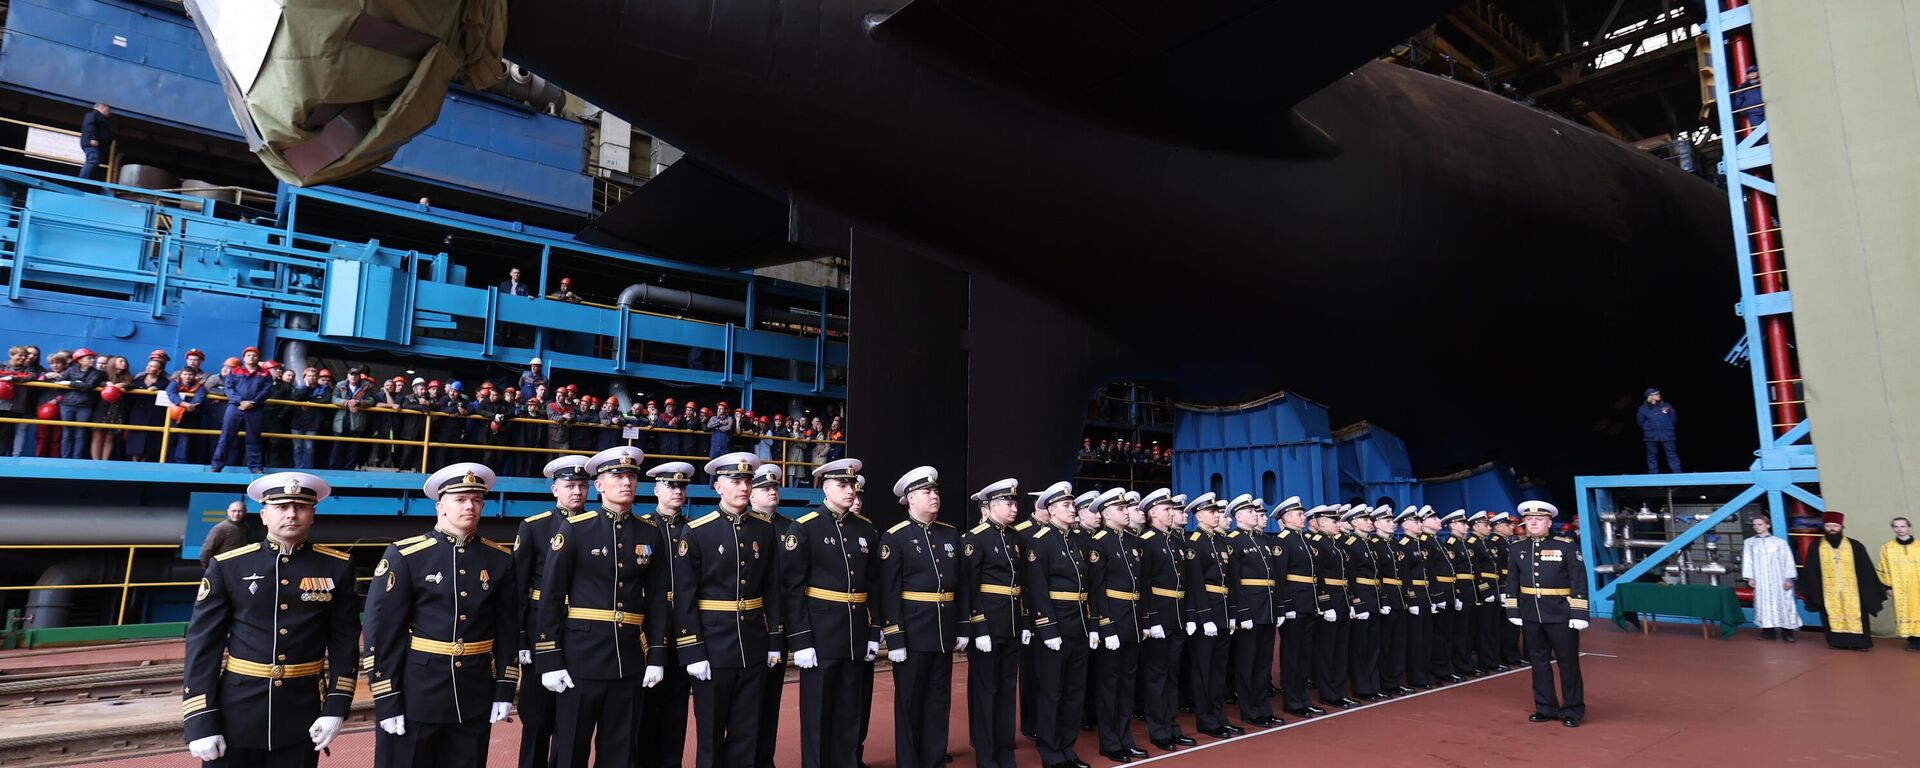 La ceremonia de botadura del submarino nuclear de la cuarta generación Krasnoyarsk - Sputnik Mundo, 1920, 31.07.2021